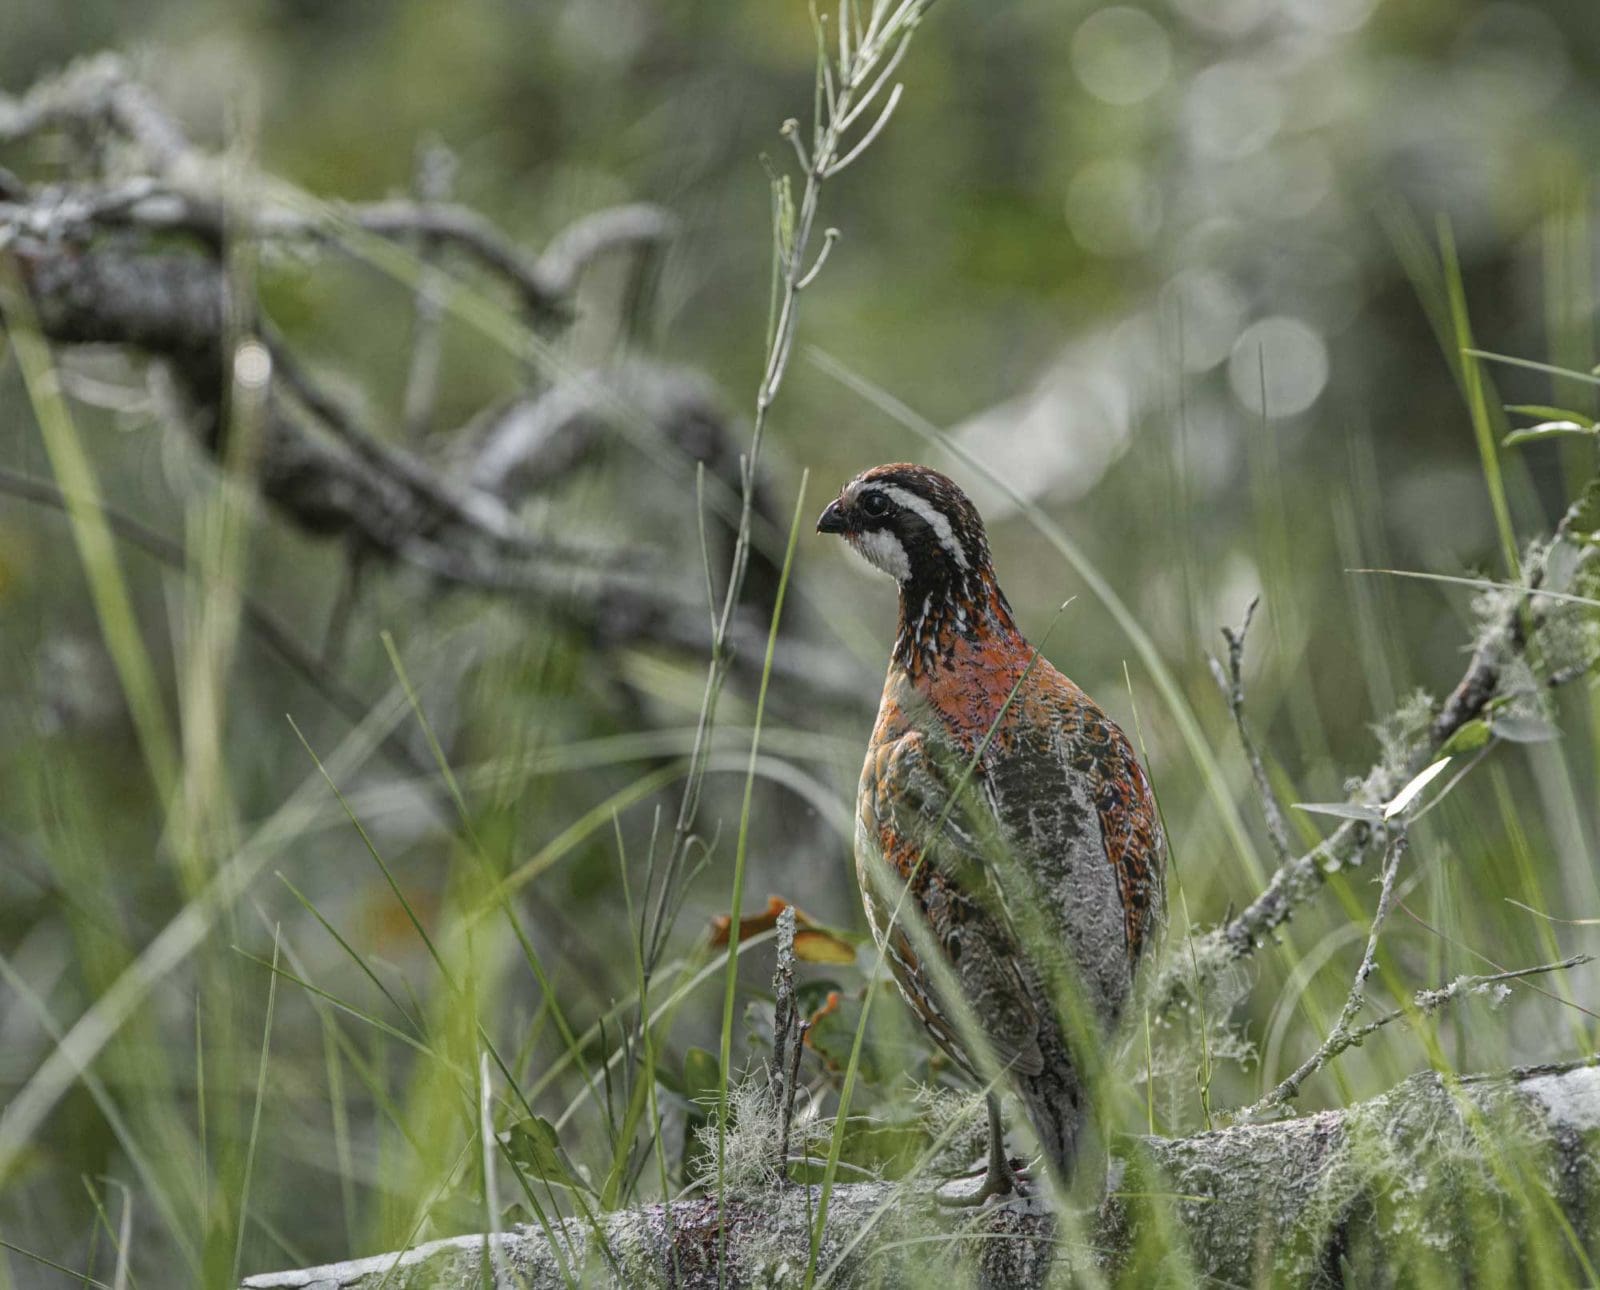 A bobwhite quail in proper habitat